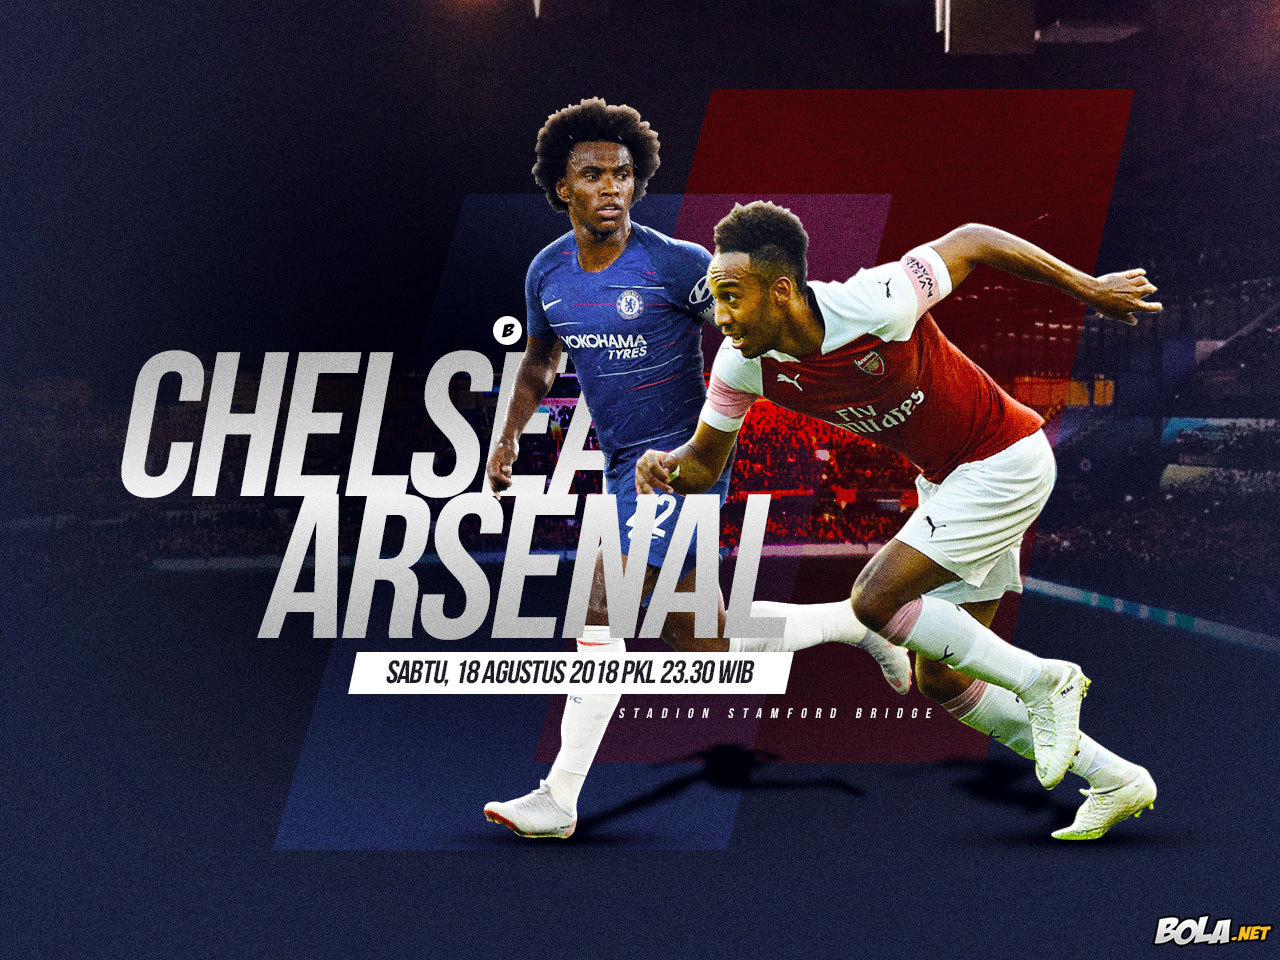 Deskripsi : Wallpaper Chelsea Vs Arsenal, size: 1280x960